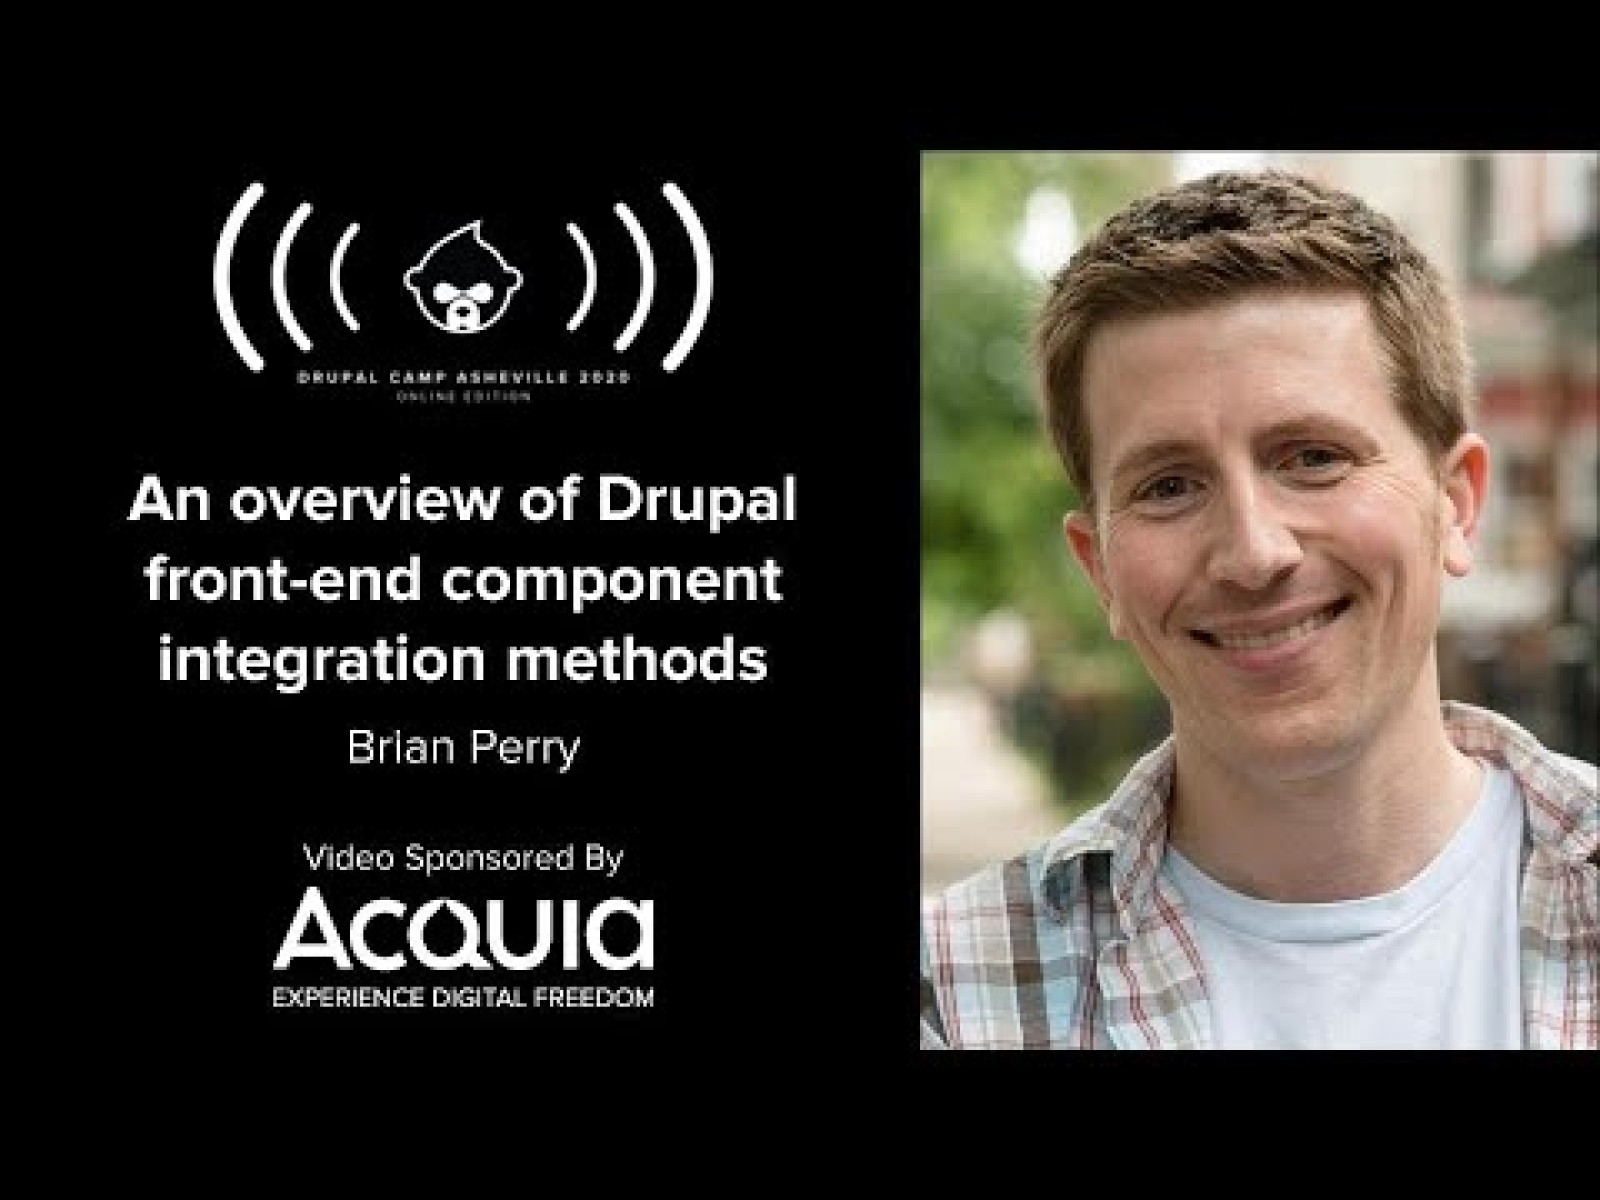 An overview of Drupal front-end component integration methods